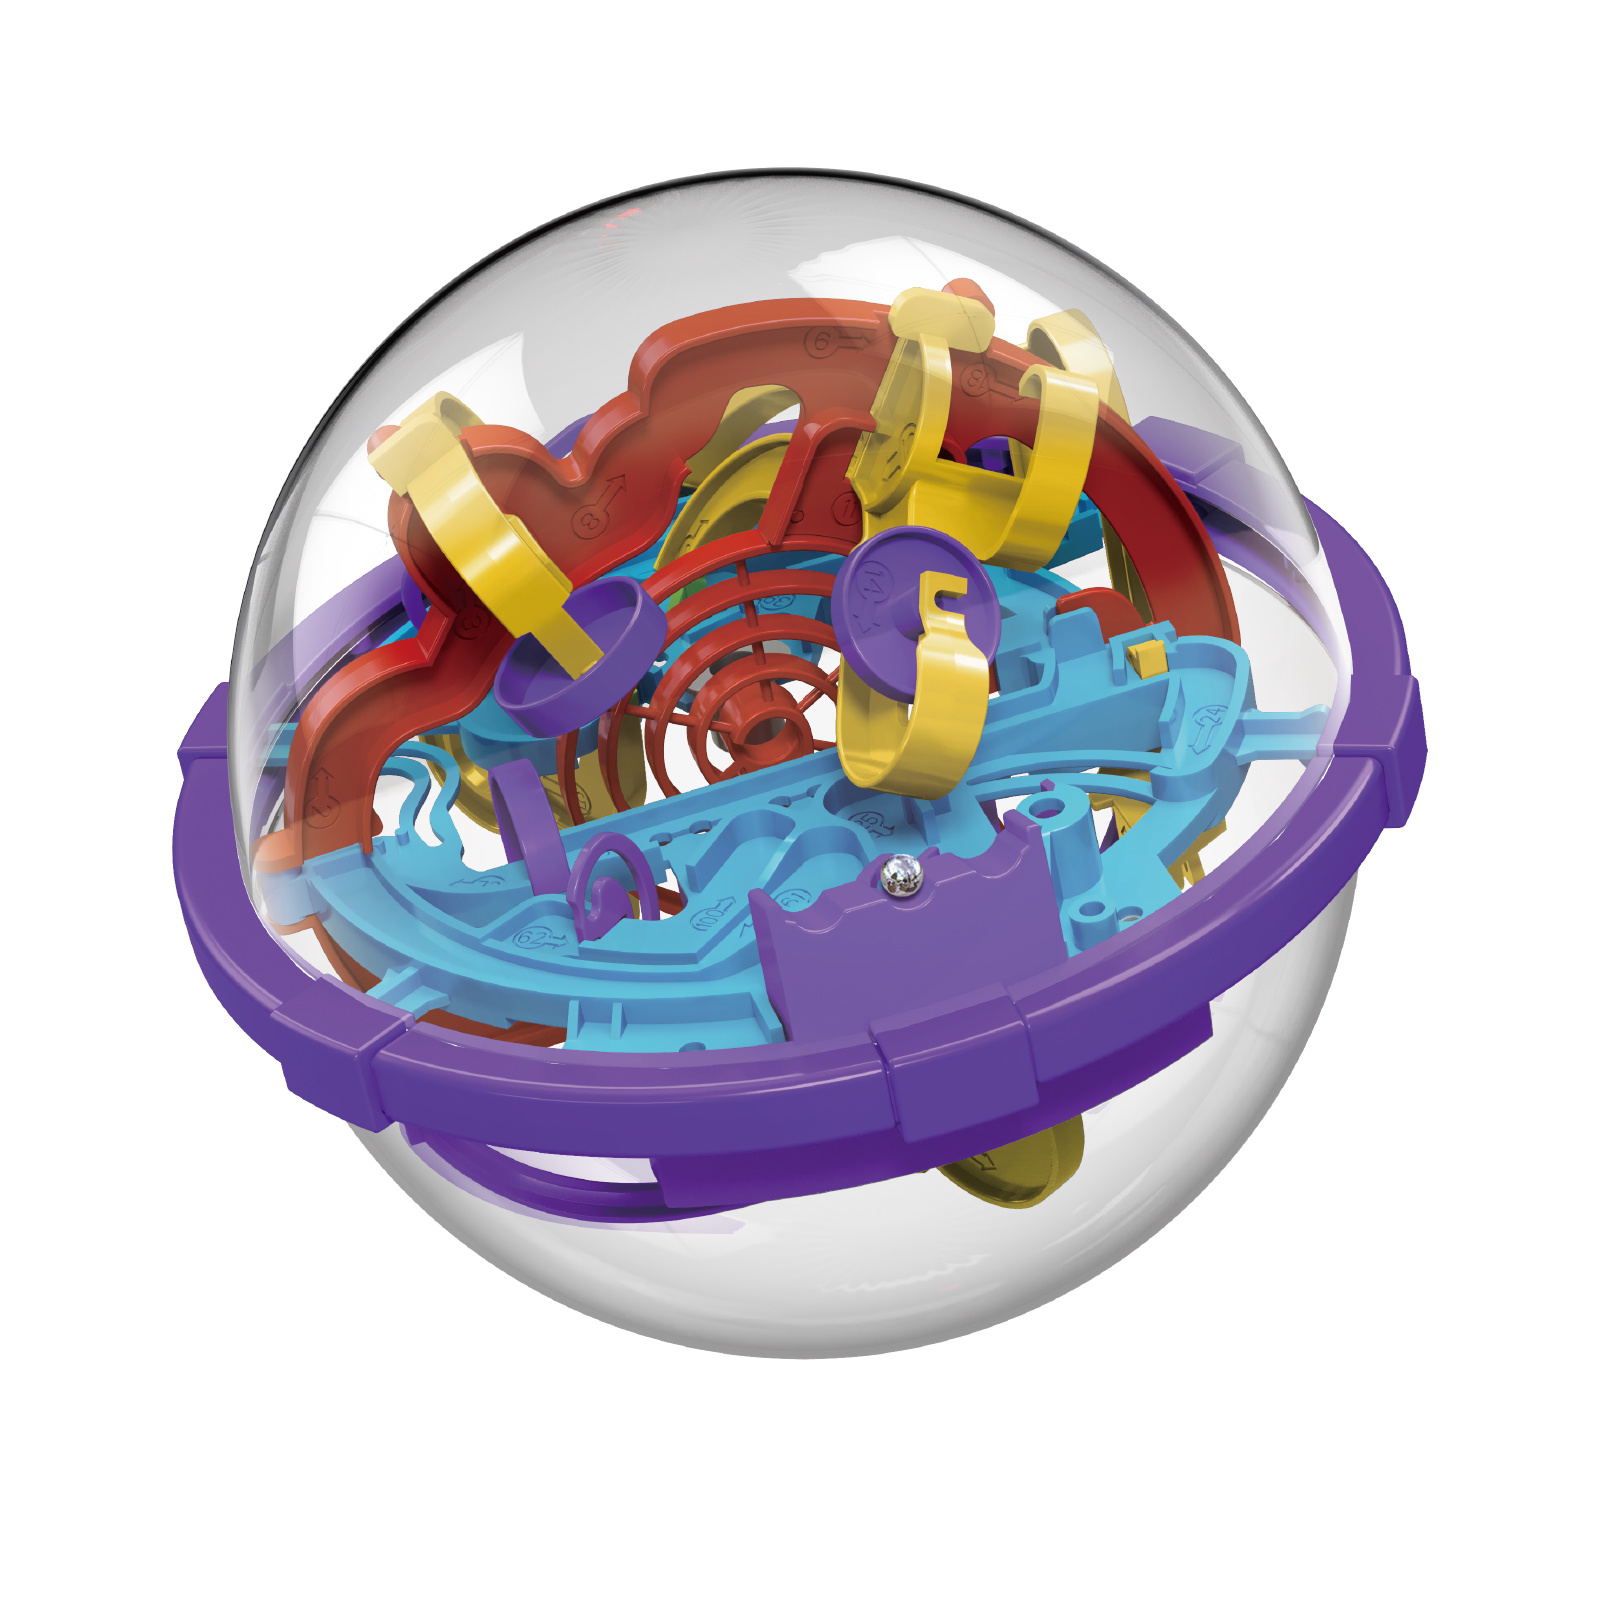 1pcs 3D Puzzle Assembling Ball Education Toys Children Gift 12 Styles  Creative Plastic Mini Multi-color Ball Puzzle Toy